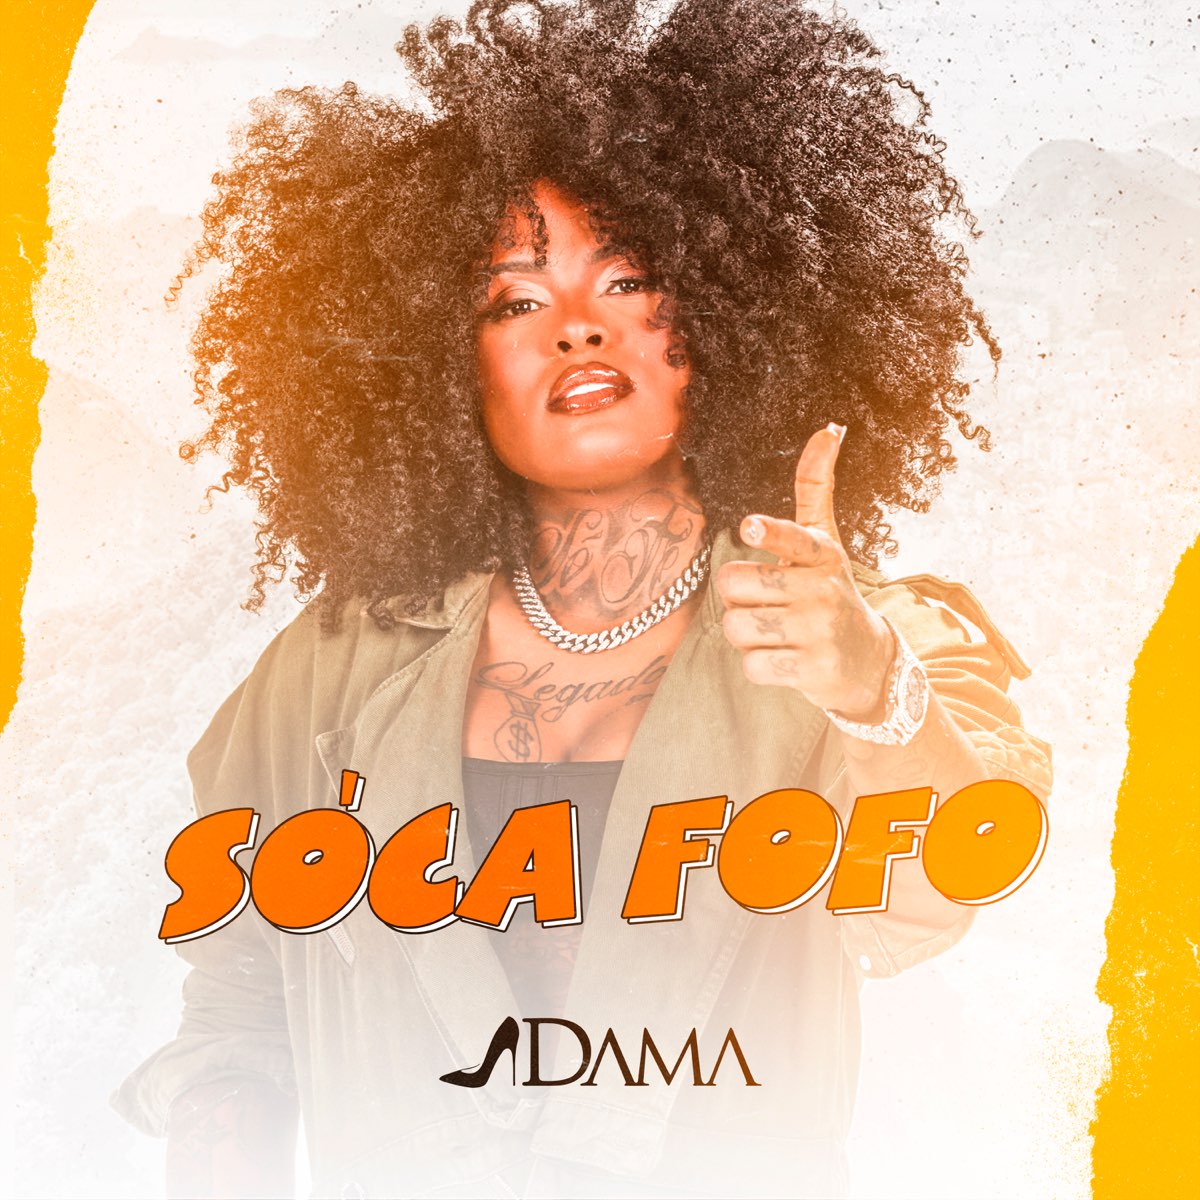 Soca Fofo, Album by Palok no Beat and Mc Roger Camisa 10